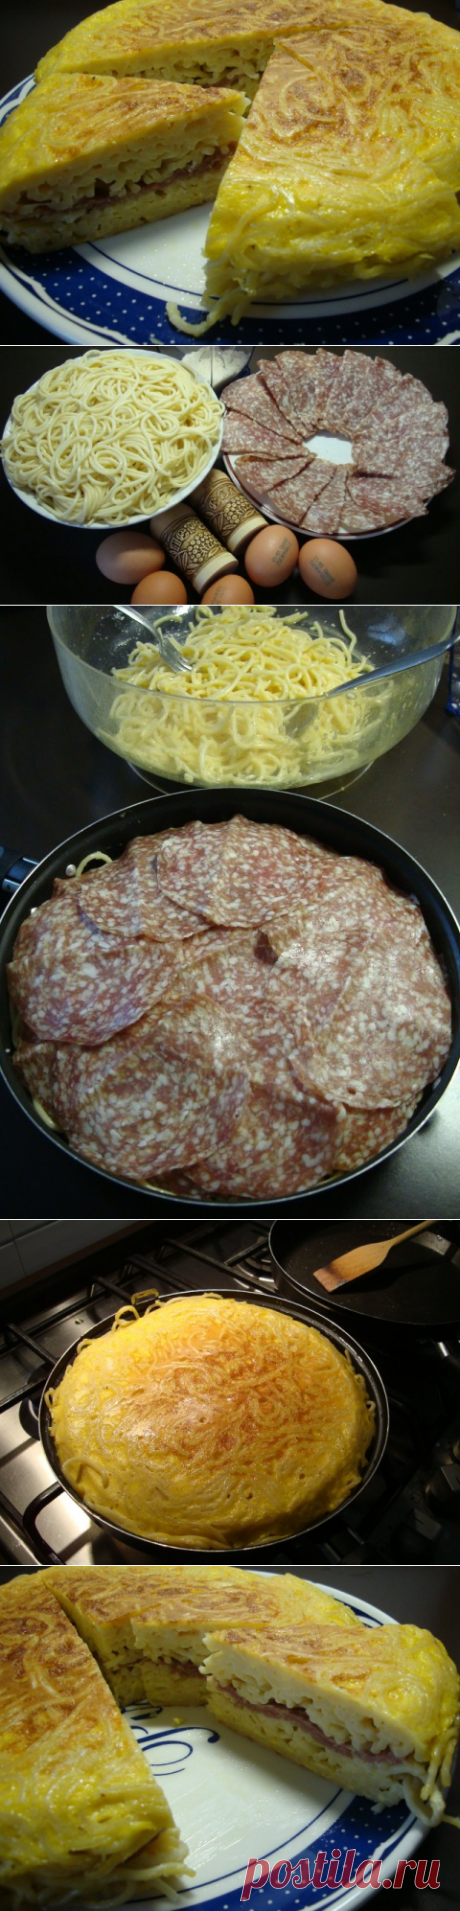 Омлет с макаронами / Frittata di spaghetti - Кухнятерапия: из Италии со вкусом!